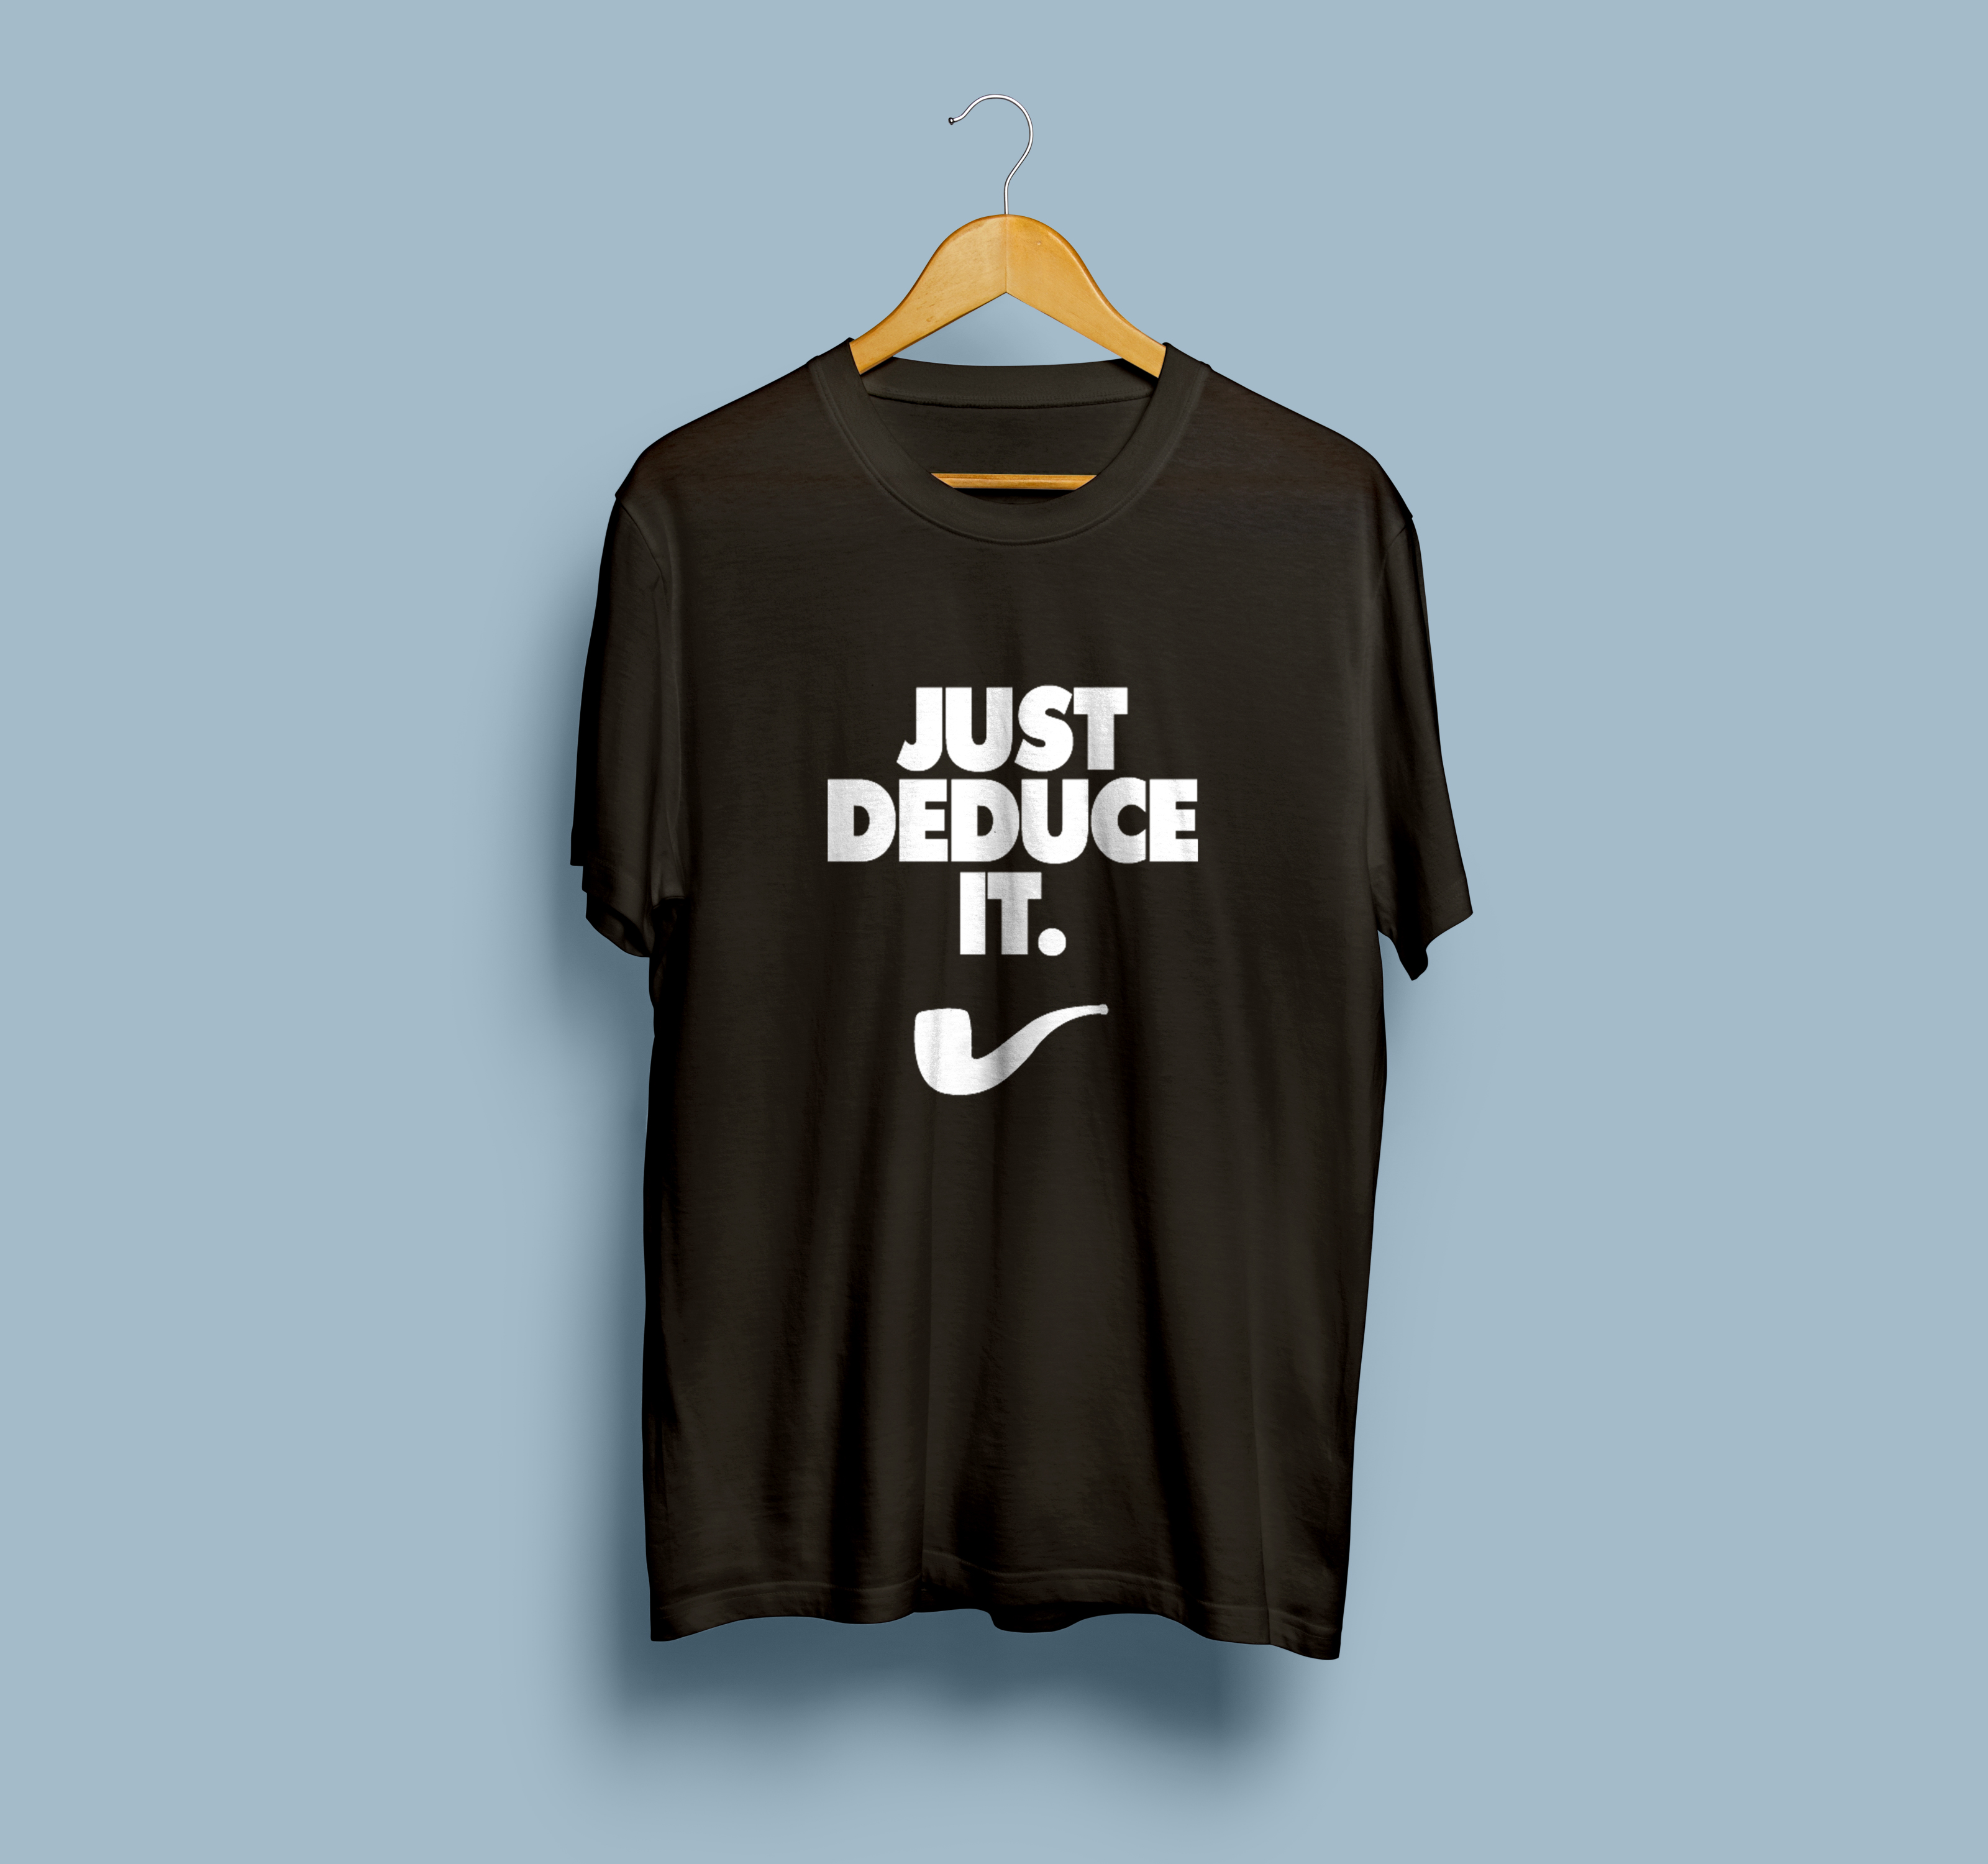 Just Deduce It Shirt - $13